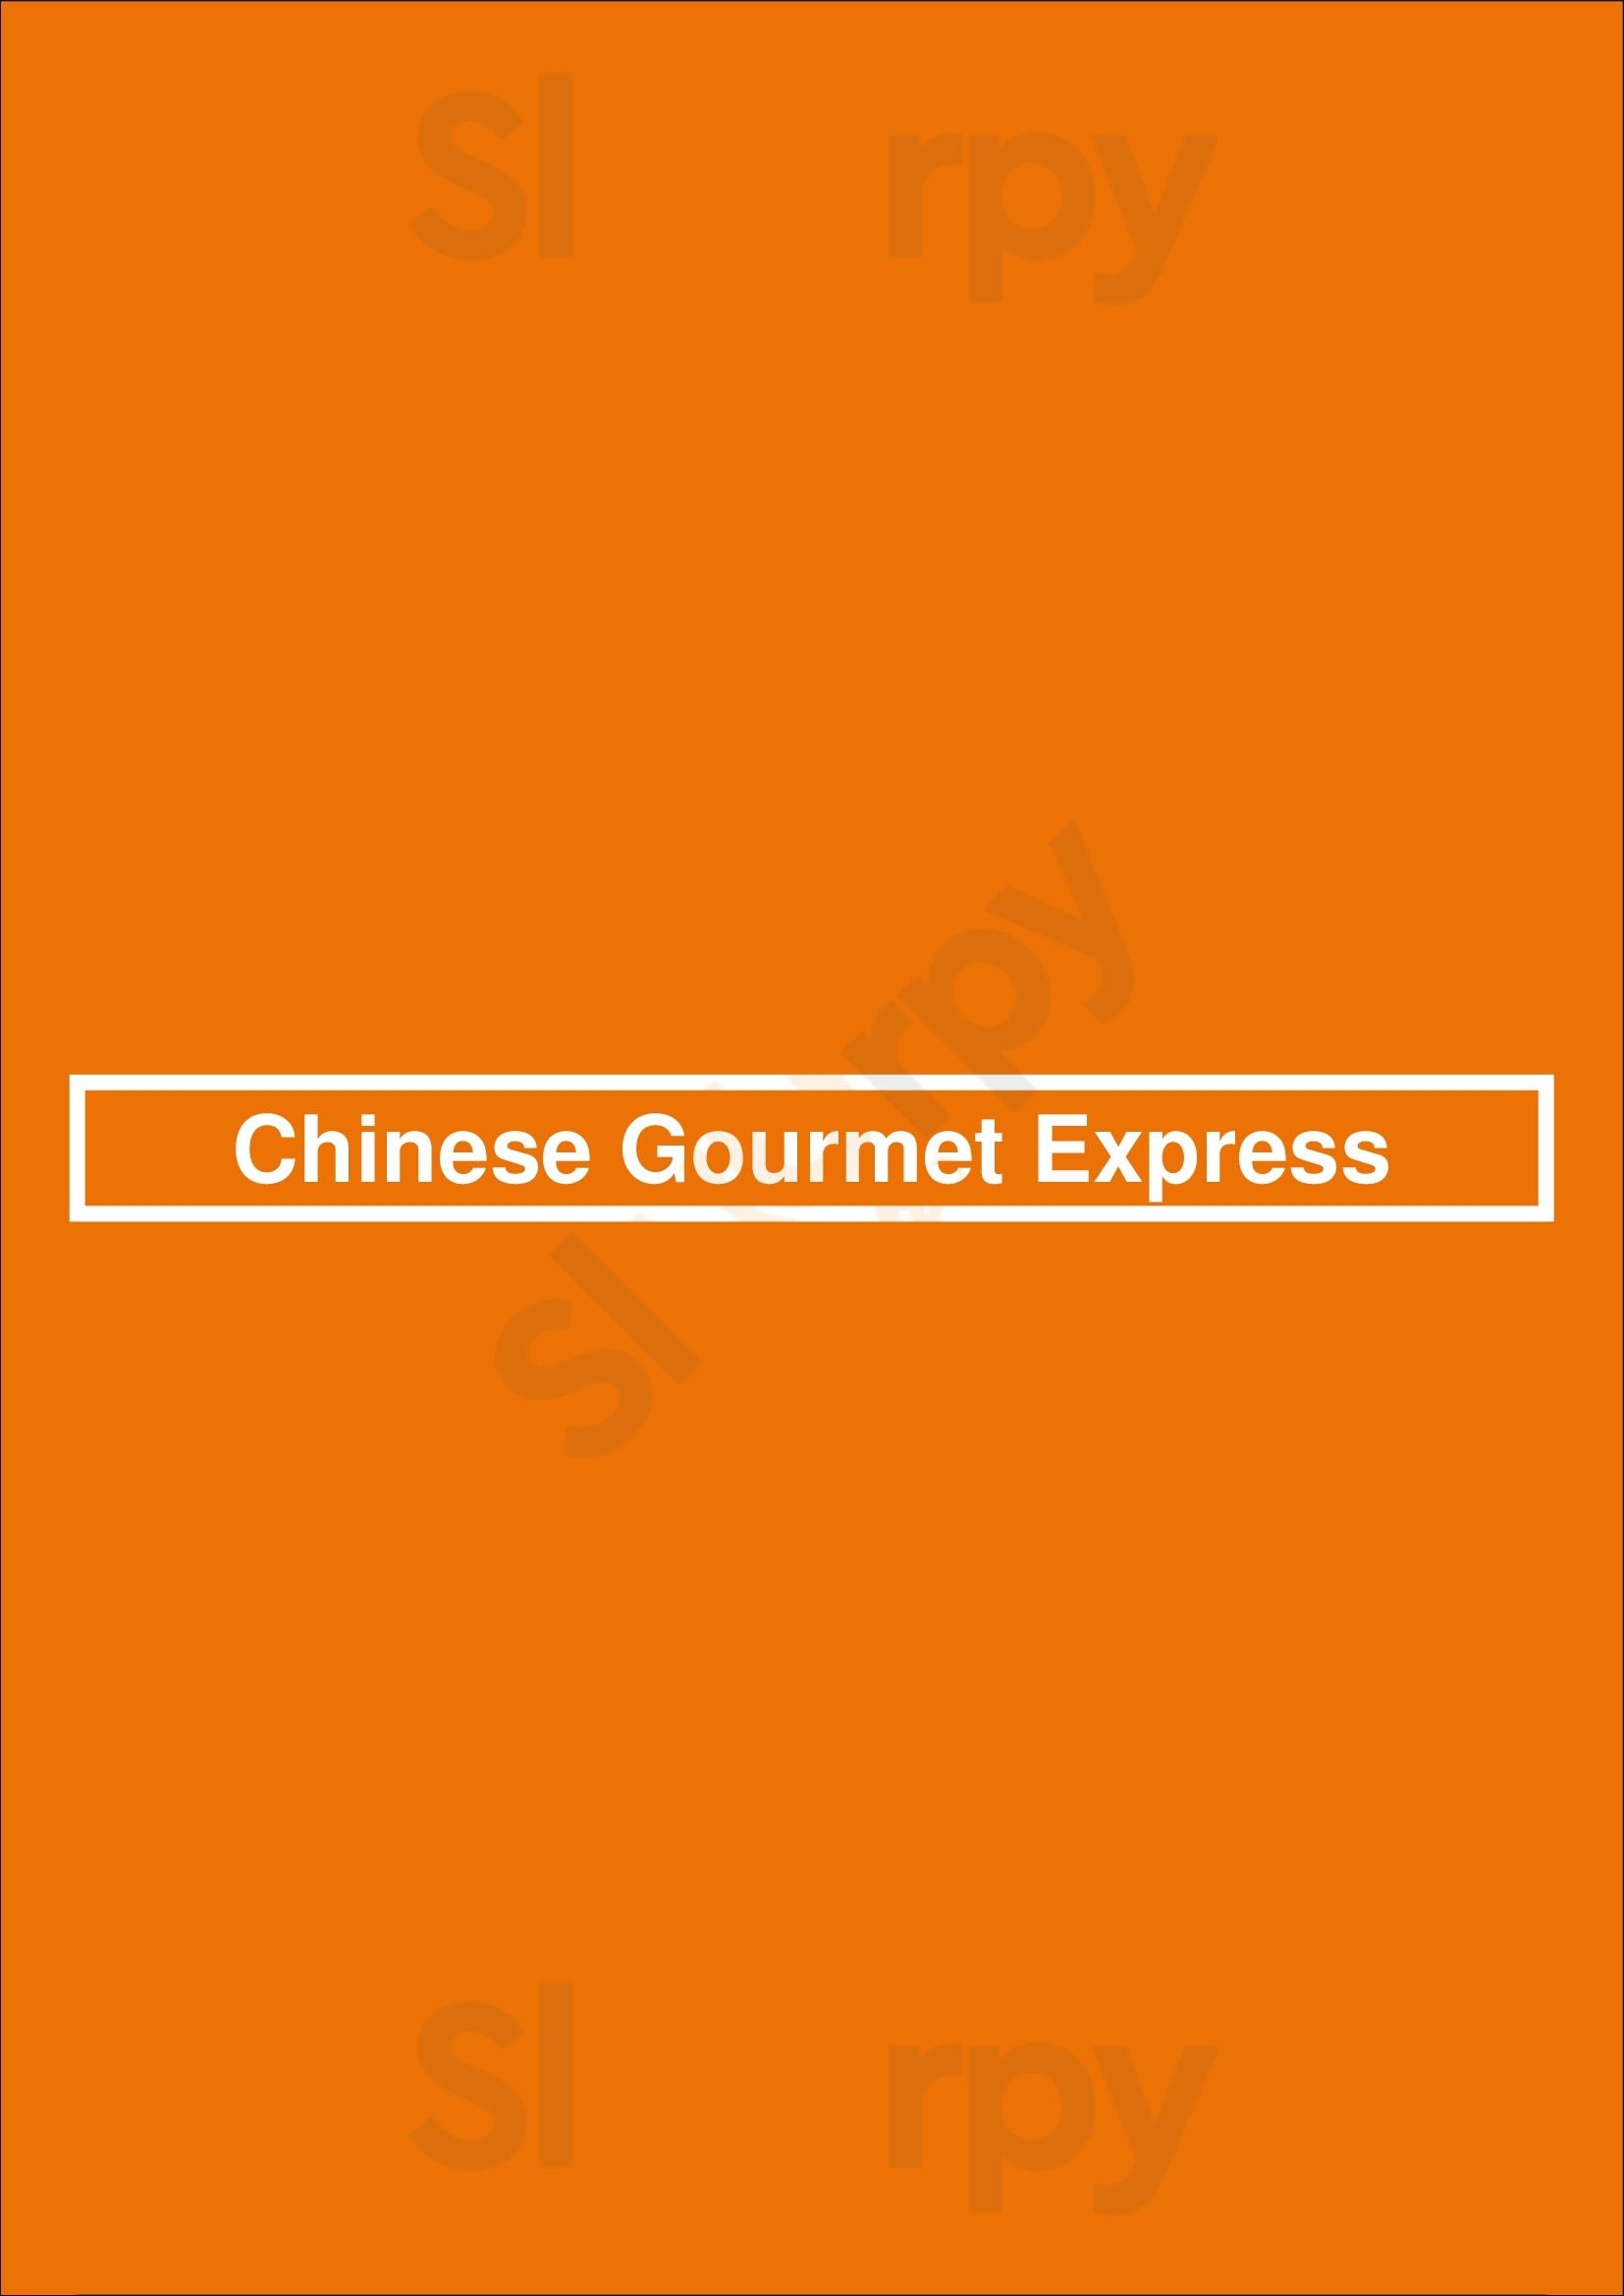 Chinese Gourmet Express Charlotte Menu - 1